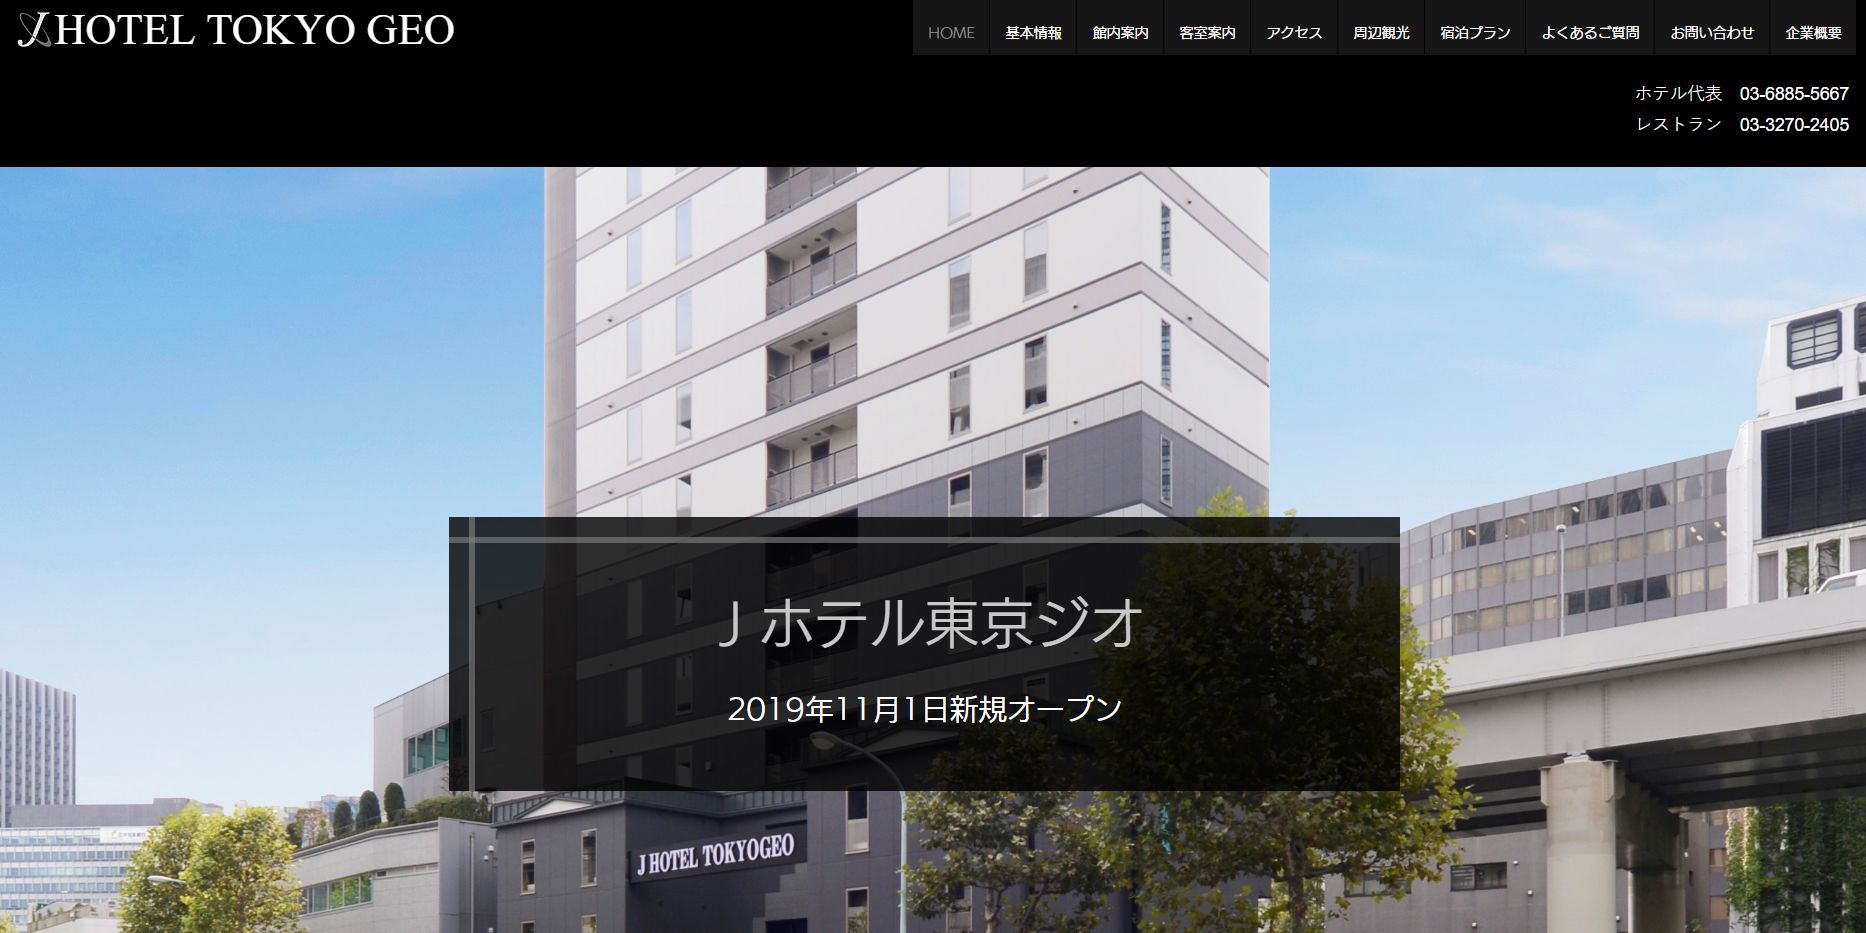 Jホテル東京ジオ